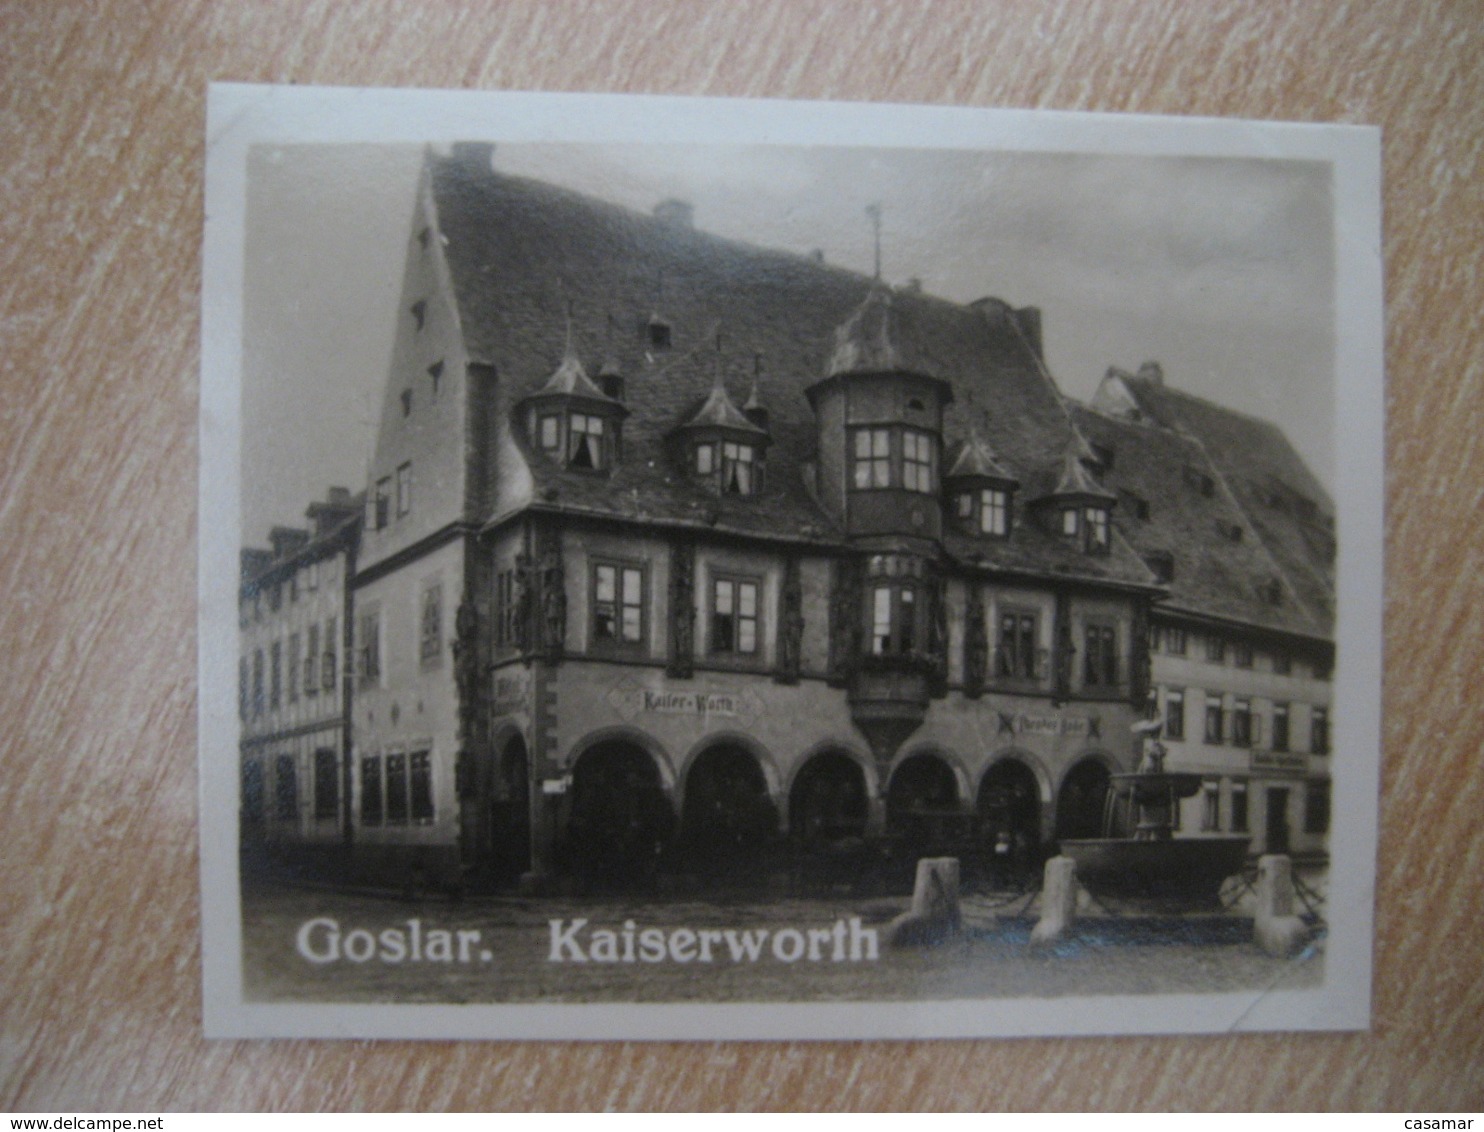 GOSLAR Kaiserworth Bilder Card Photo Photography (4x5,2cm) Harz Mountains GERMANY 30s Tobacco - Non Classés